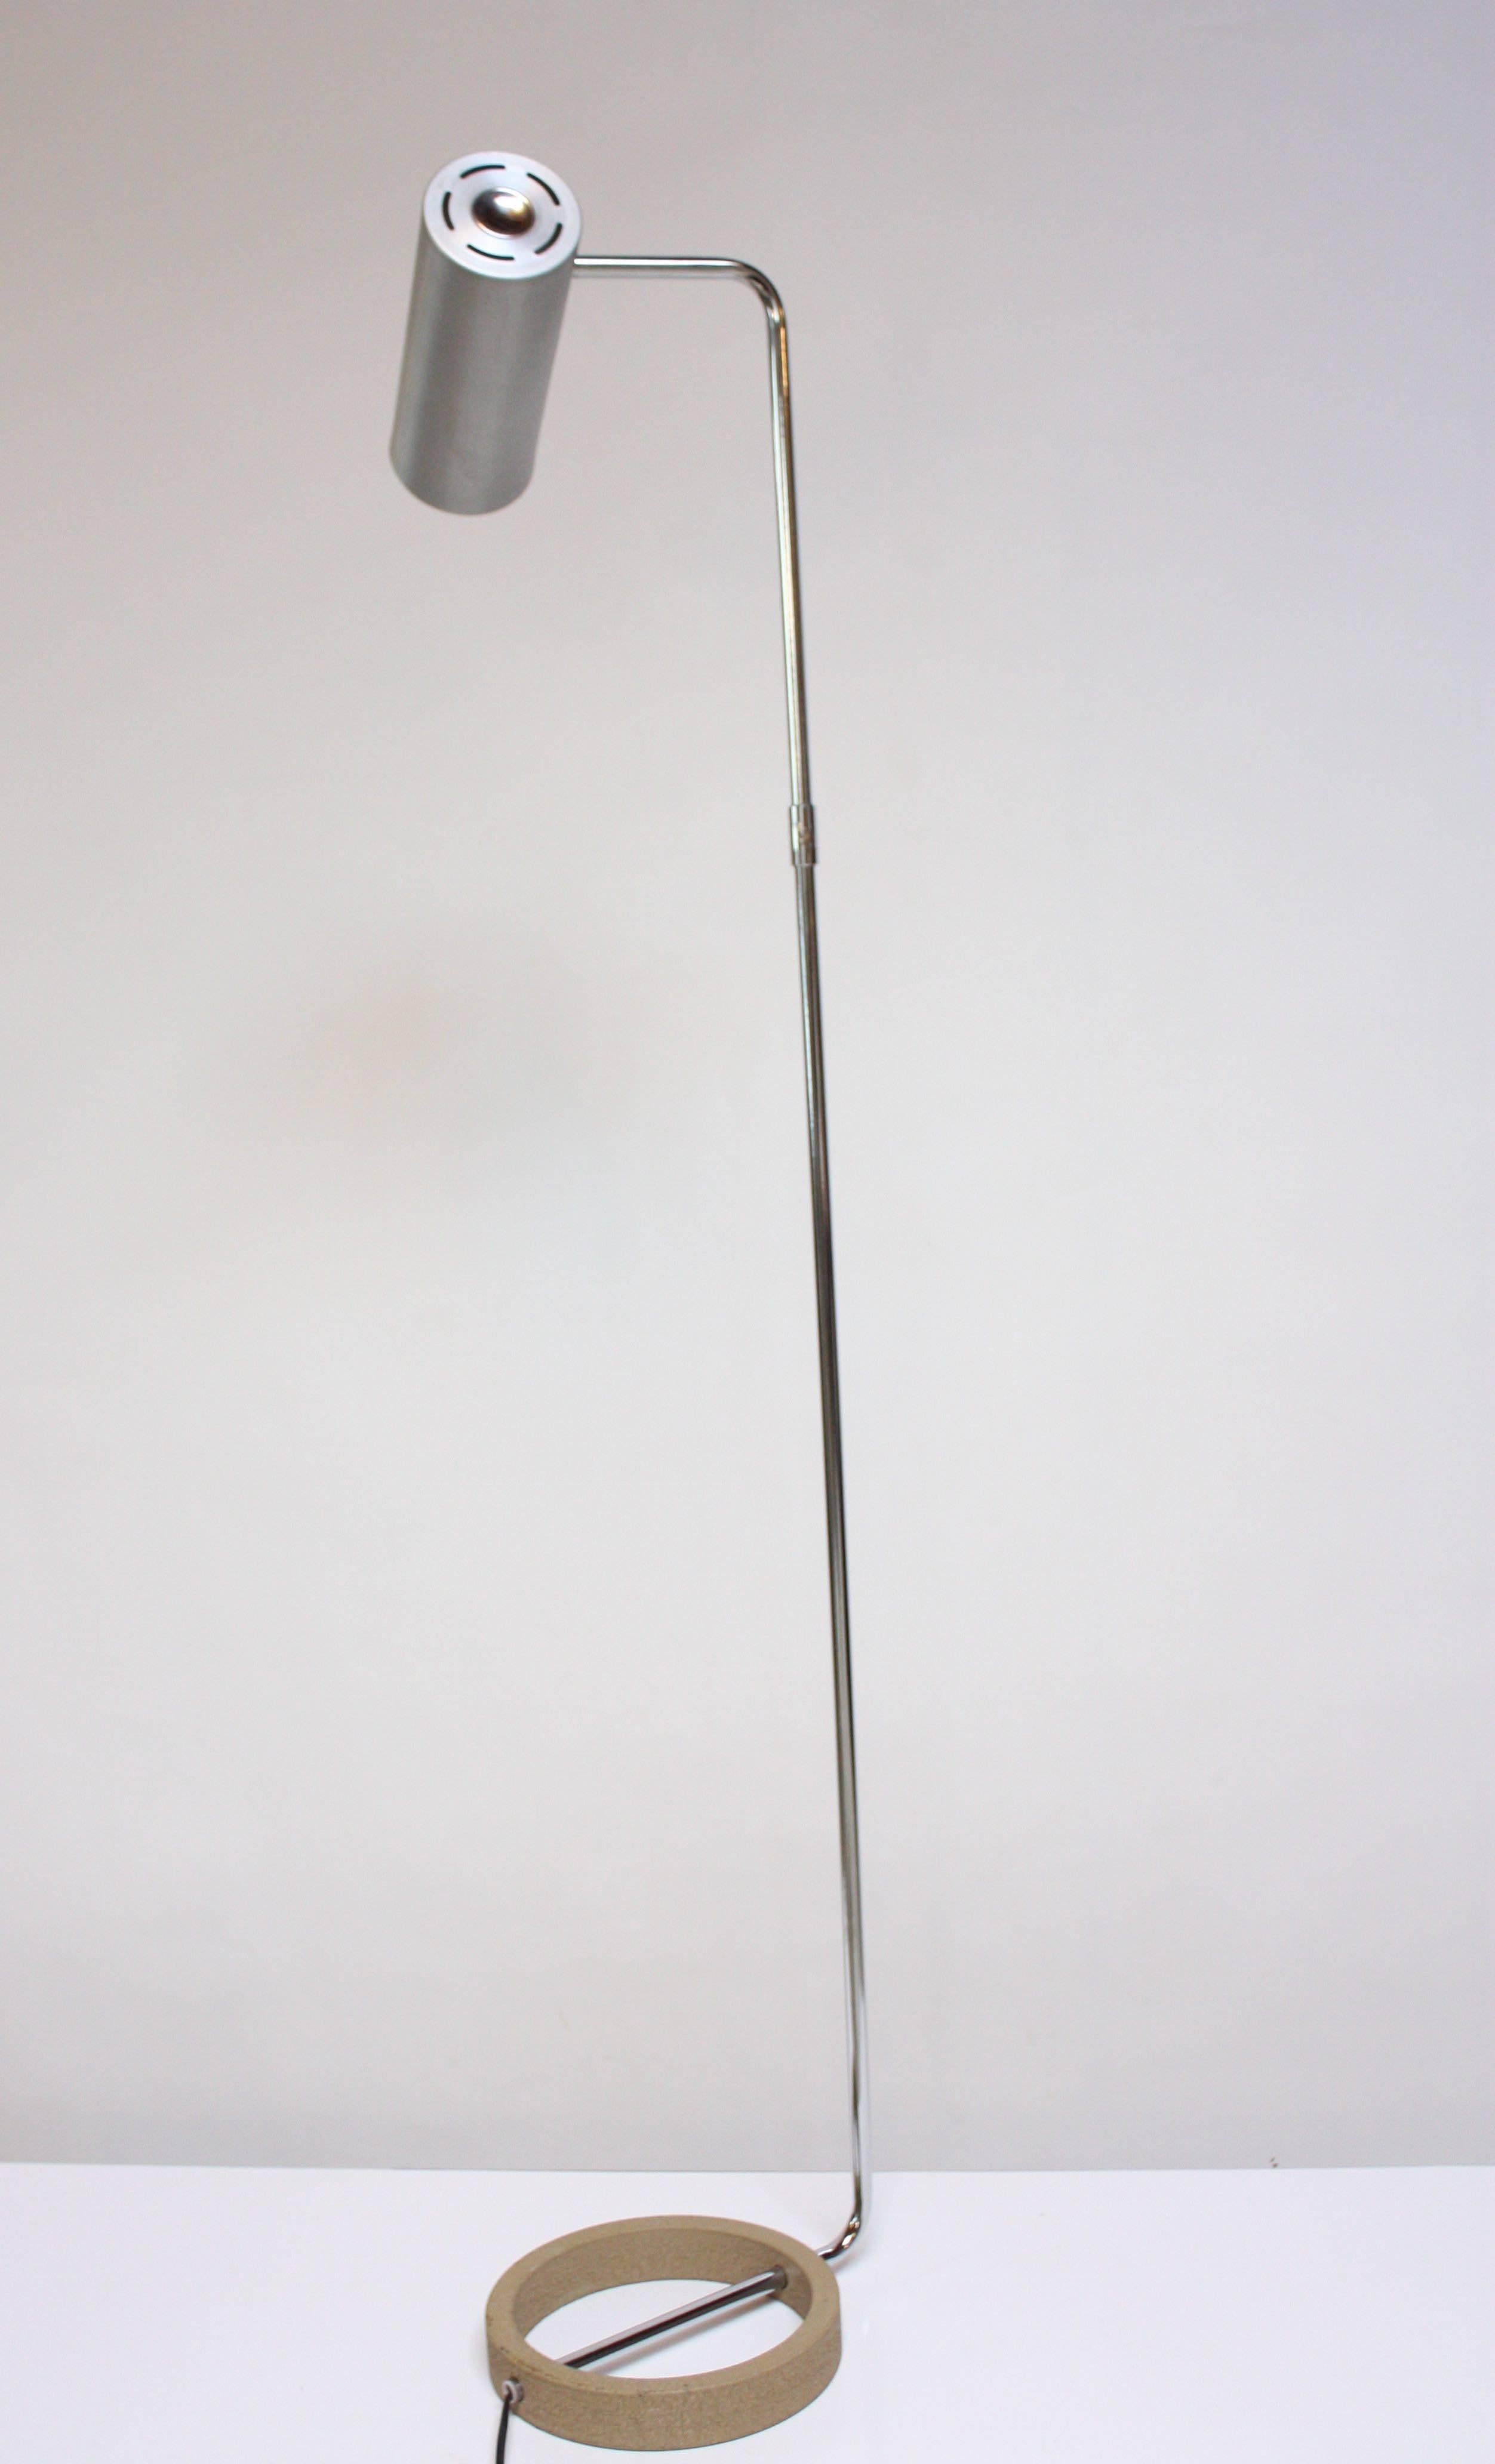 English Brushed Aluminum Floor Lamp by Paul Mayen for Habitat